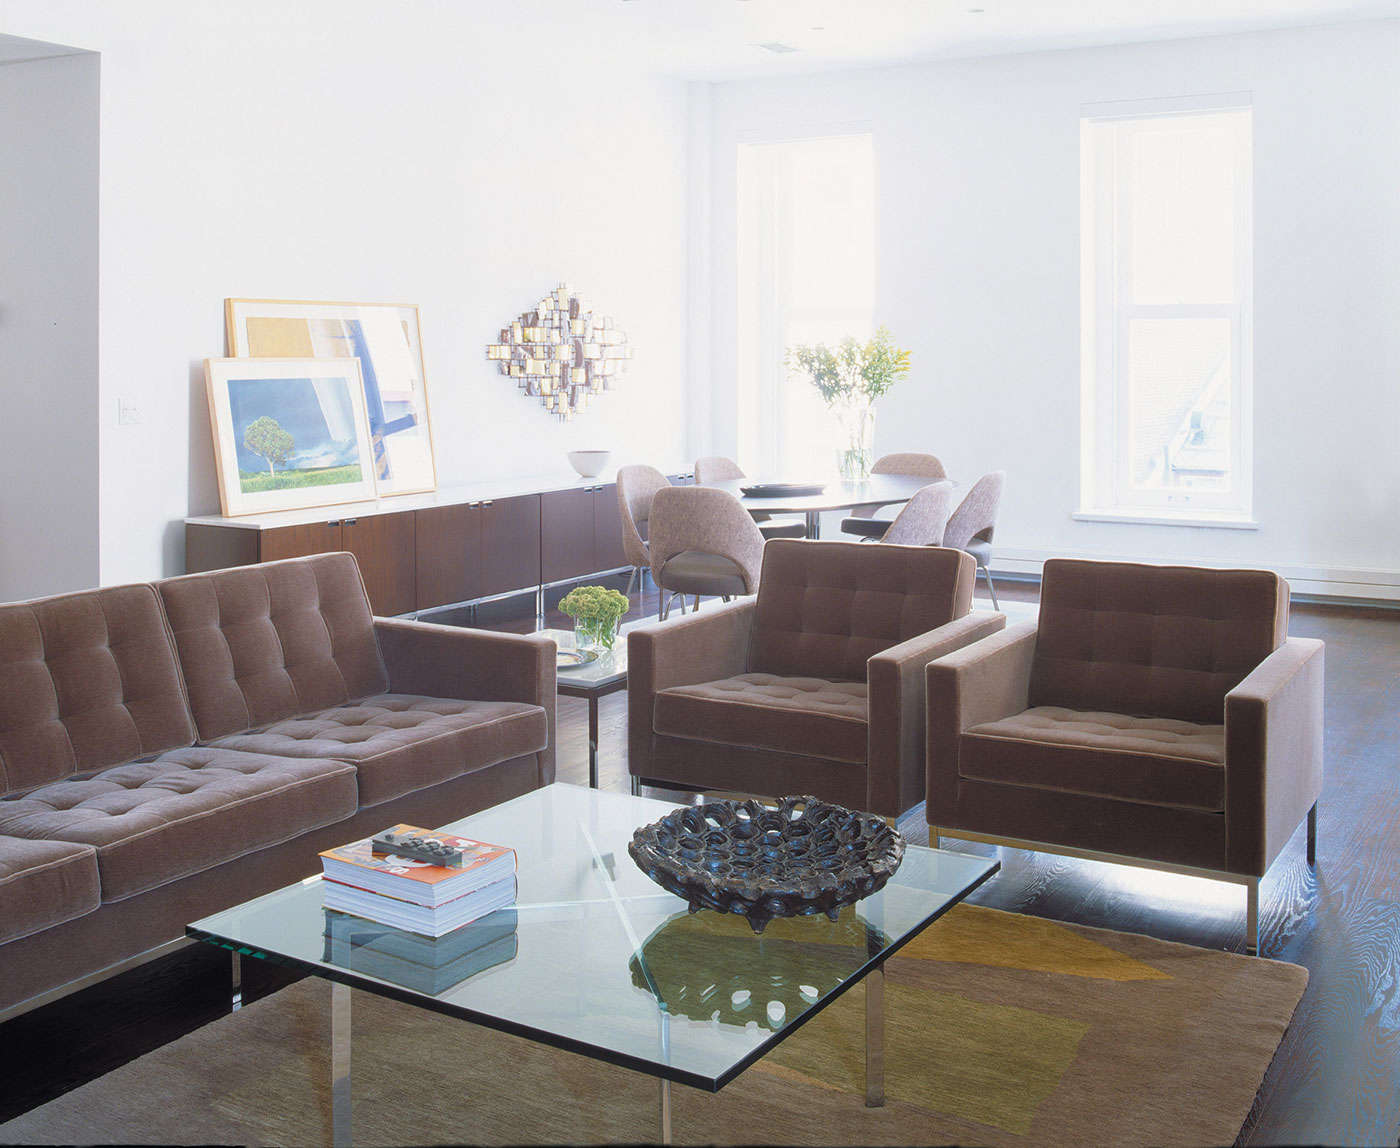 Obegi Home Furniture Knoll Chairs And Sofa